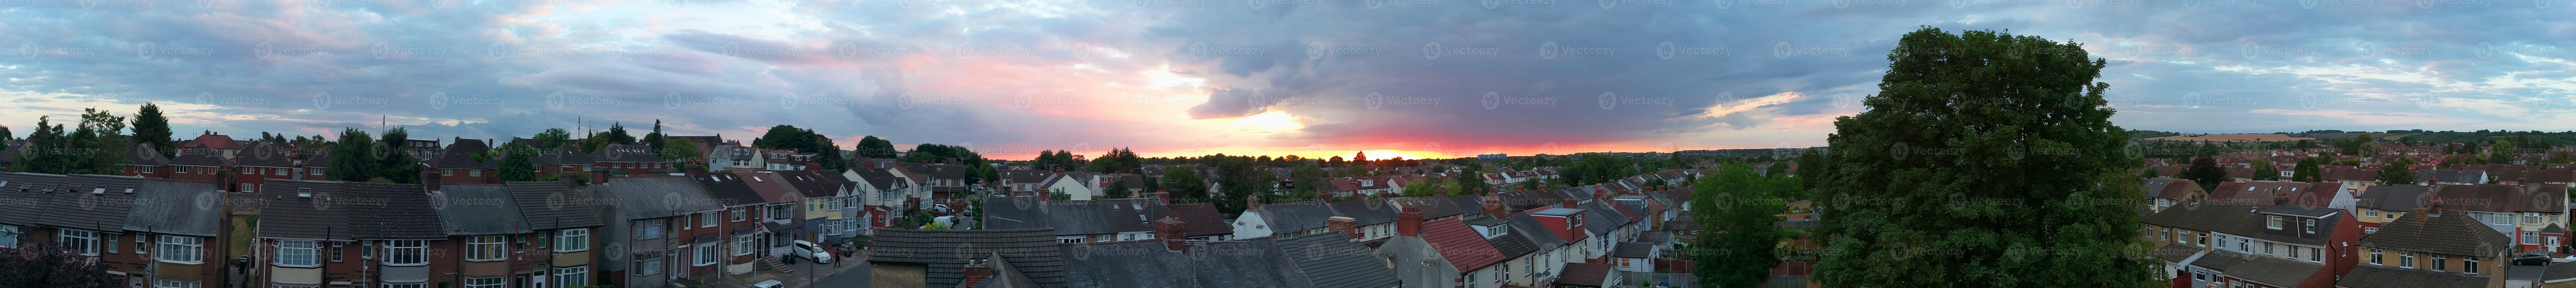 vista aérea de casas residenciais de luton no belo pôr do sol e nuvens coloridas e céu sobre a cidade de luton da inglaterra foto